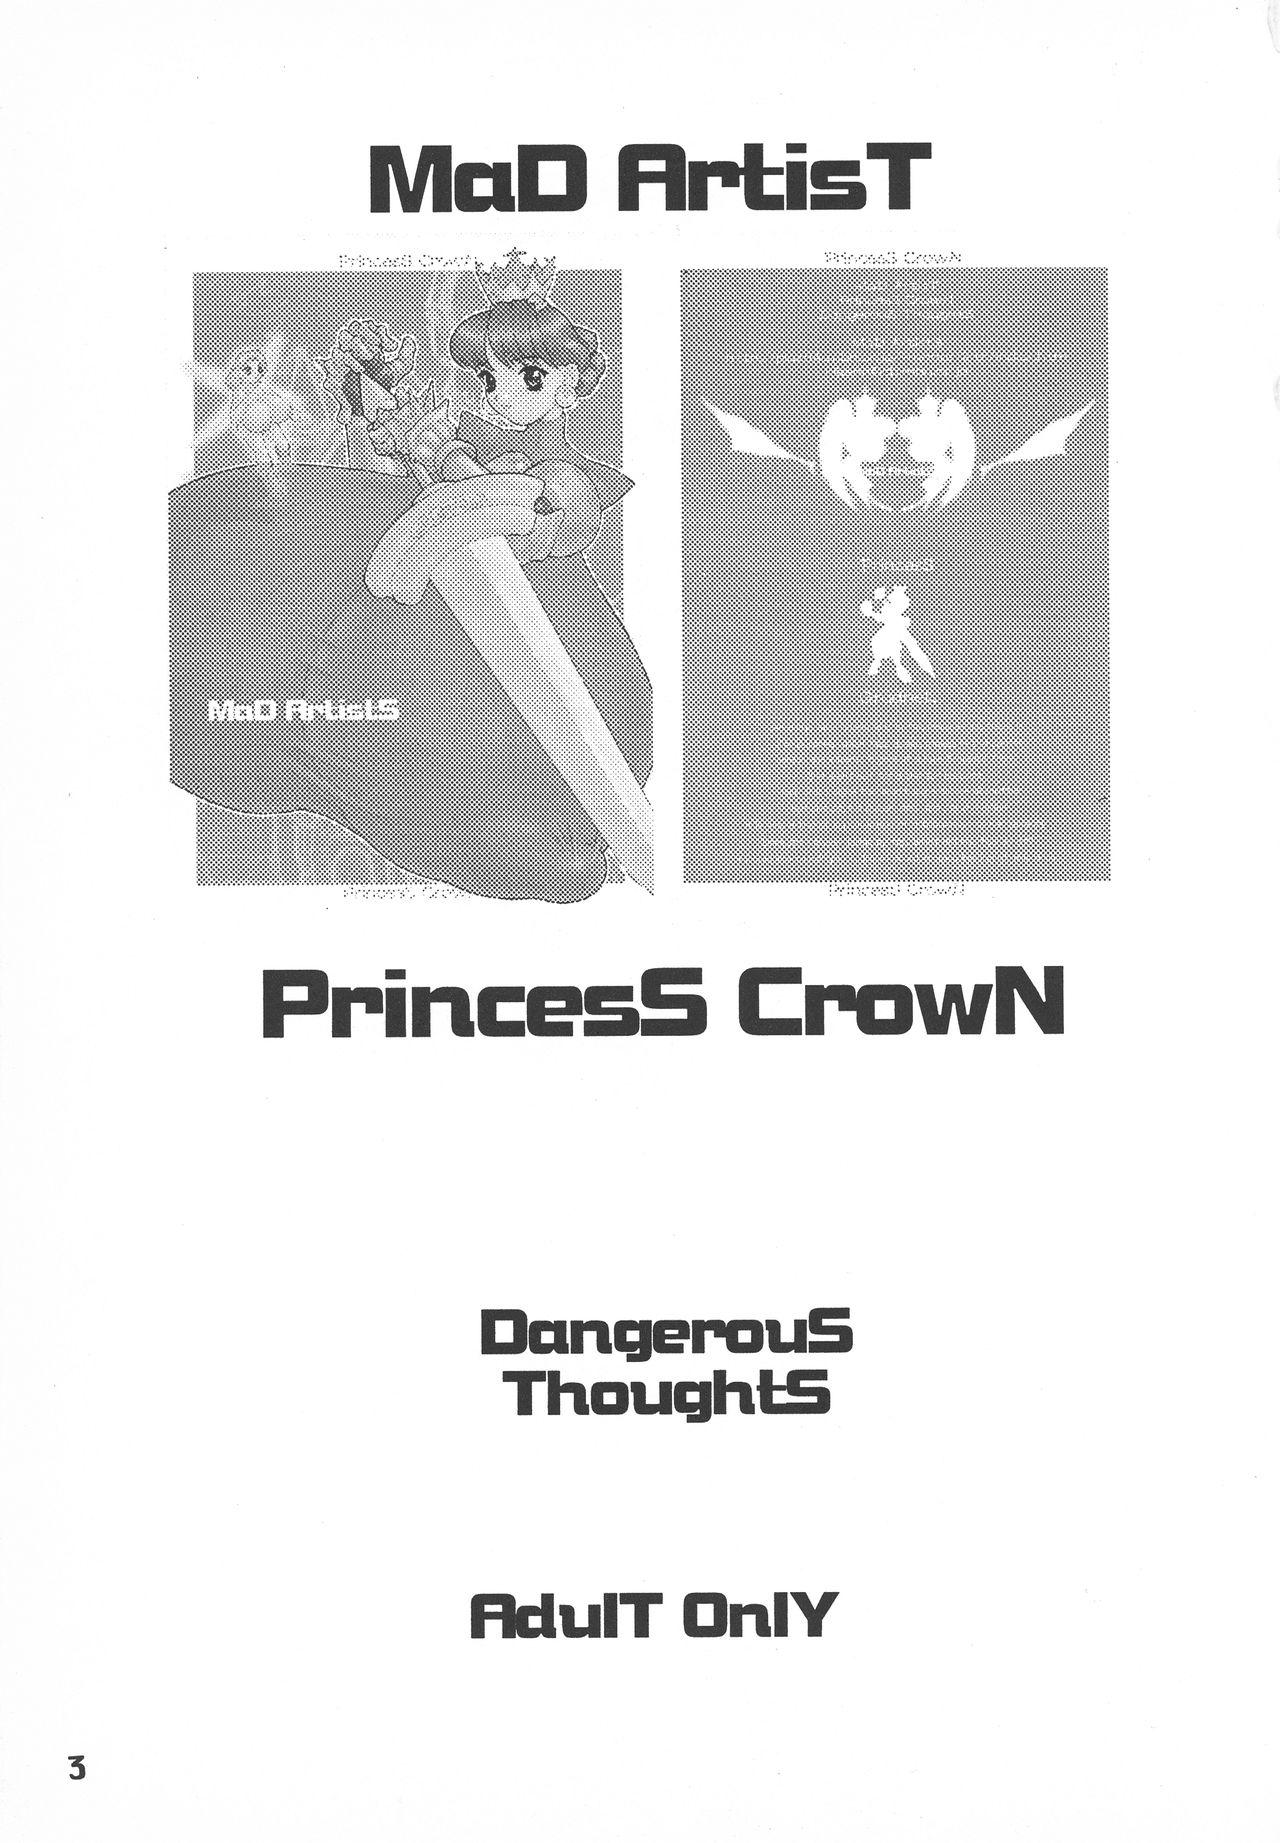 Playing MAD ARTISTS PRINCESS CROWN - Princess crown Gang - Page 3